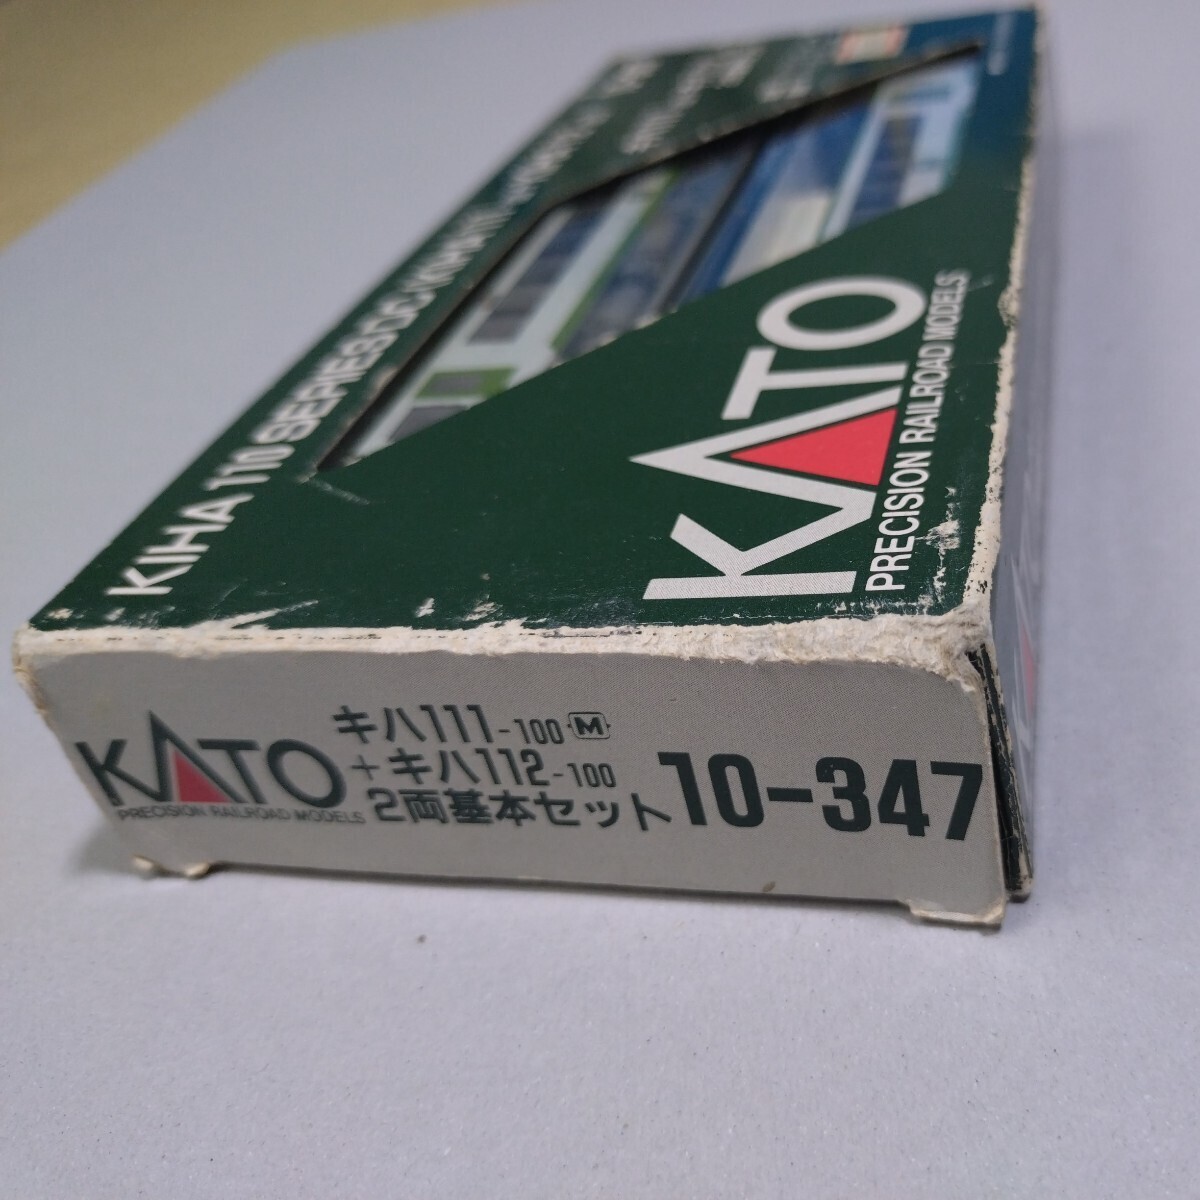 KATO 10-347ki is 110 series (ki is 111-100+ki is 112-100)2 both basic set JR East Japan 